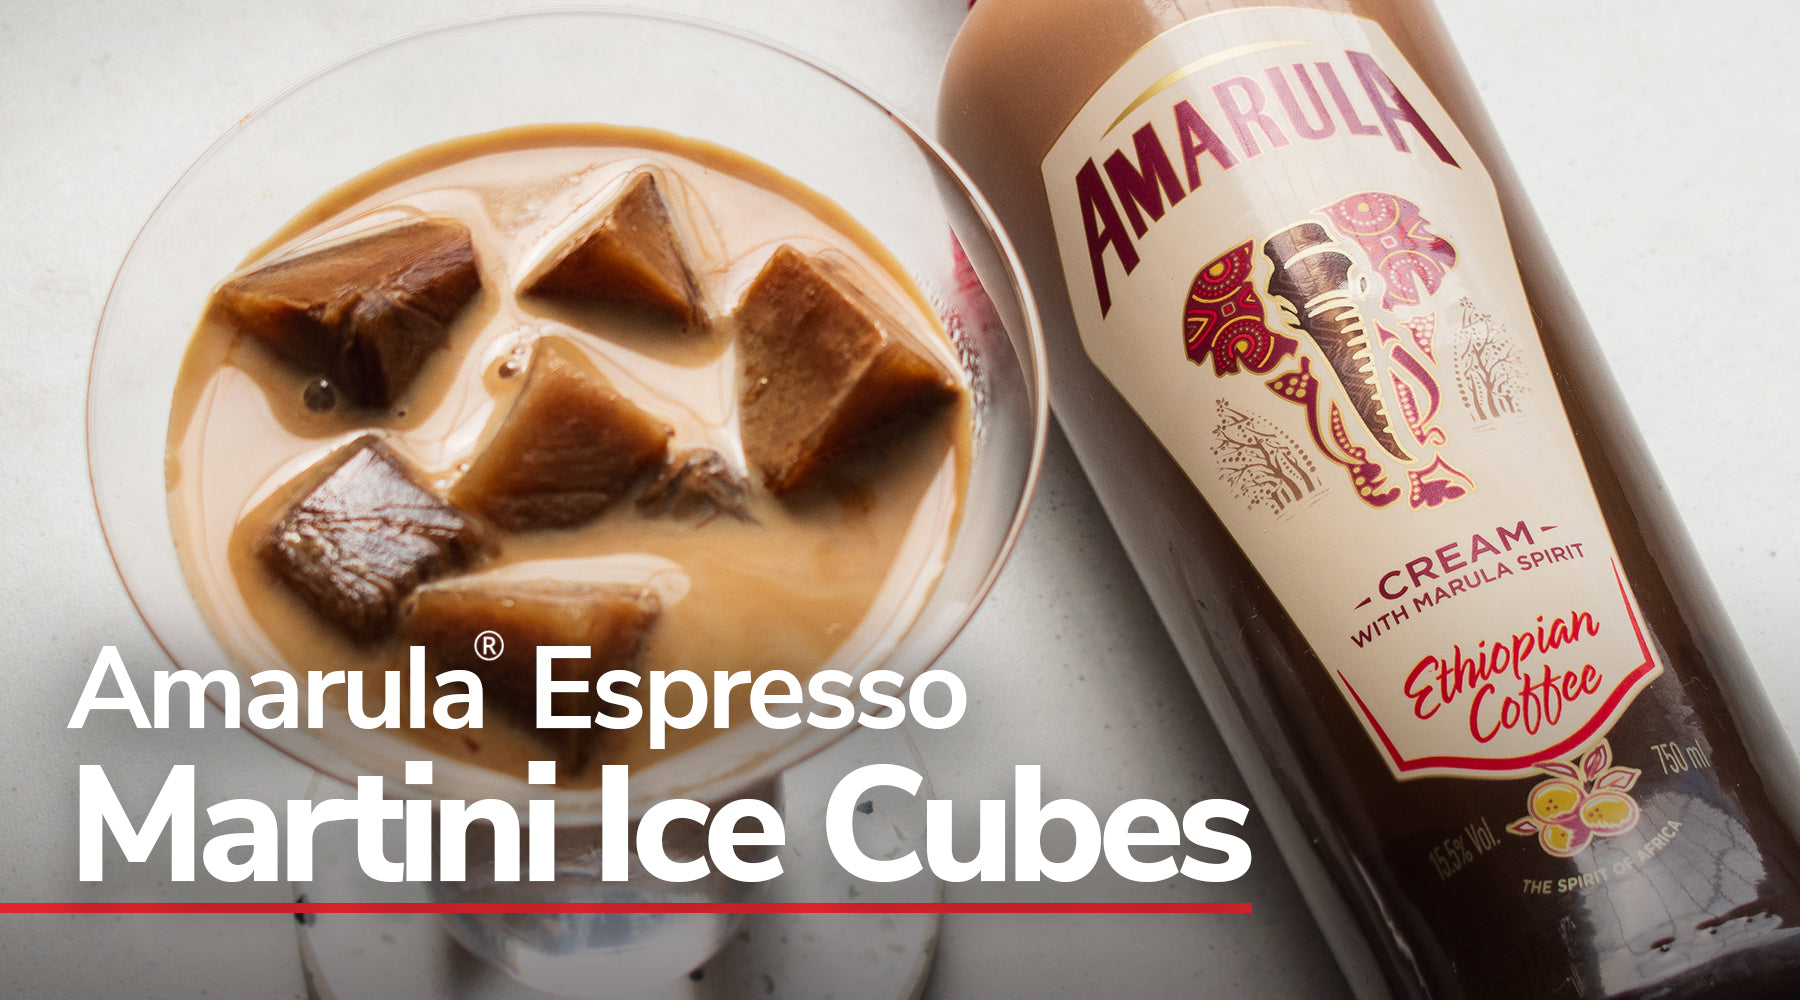 Amarula Espresso Martini Ice Cubes